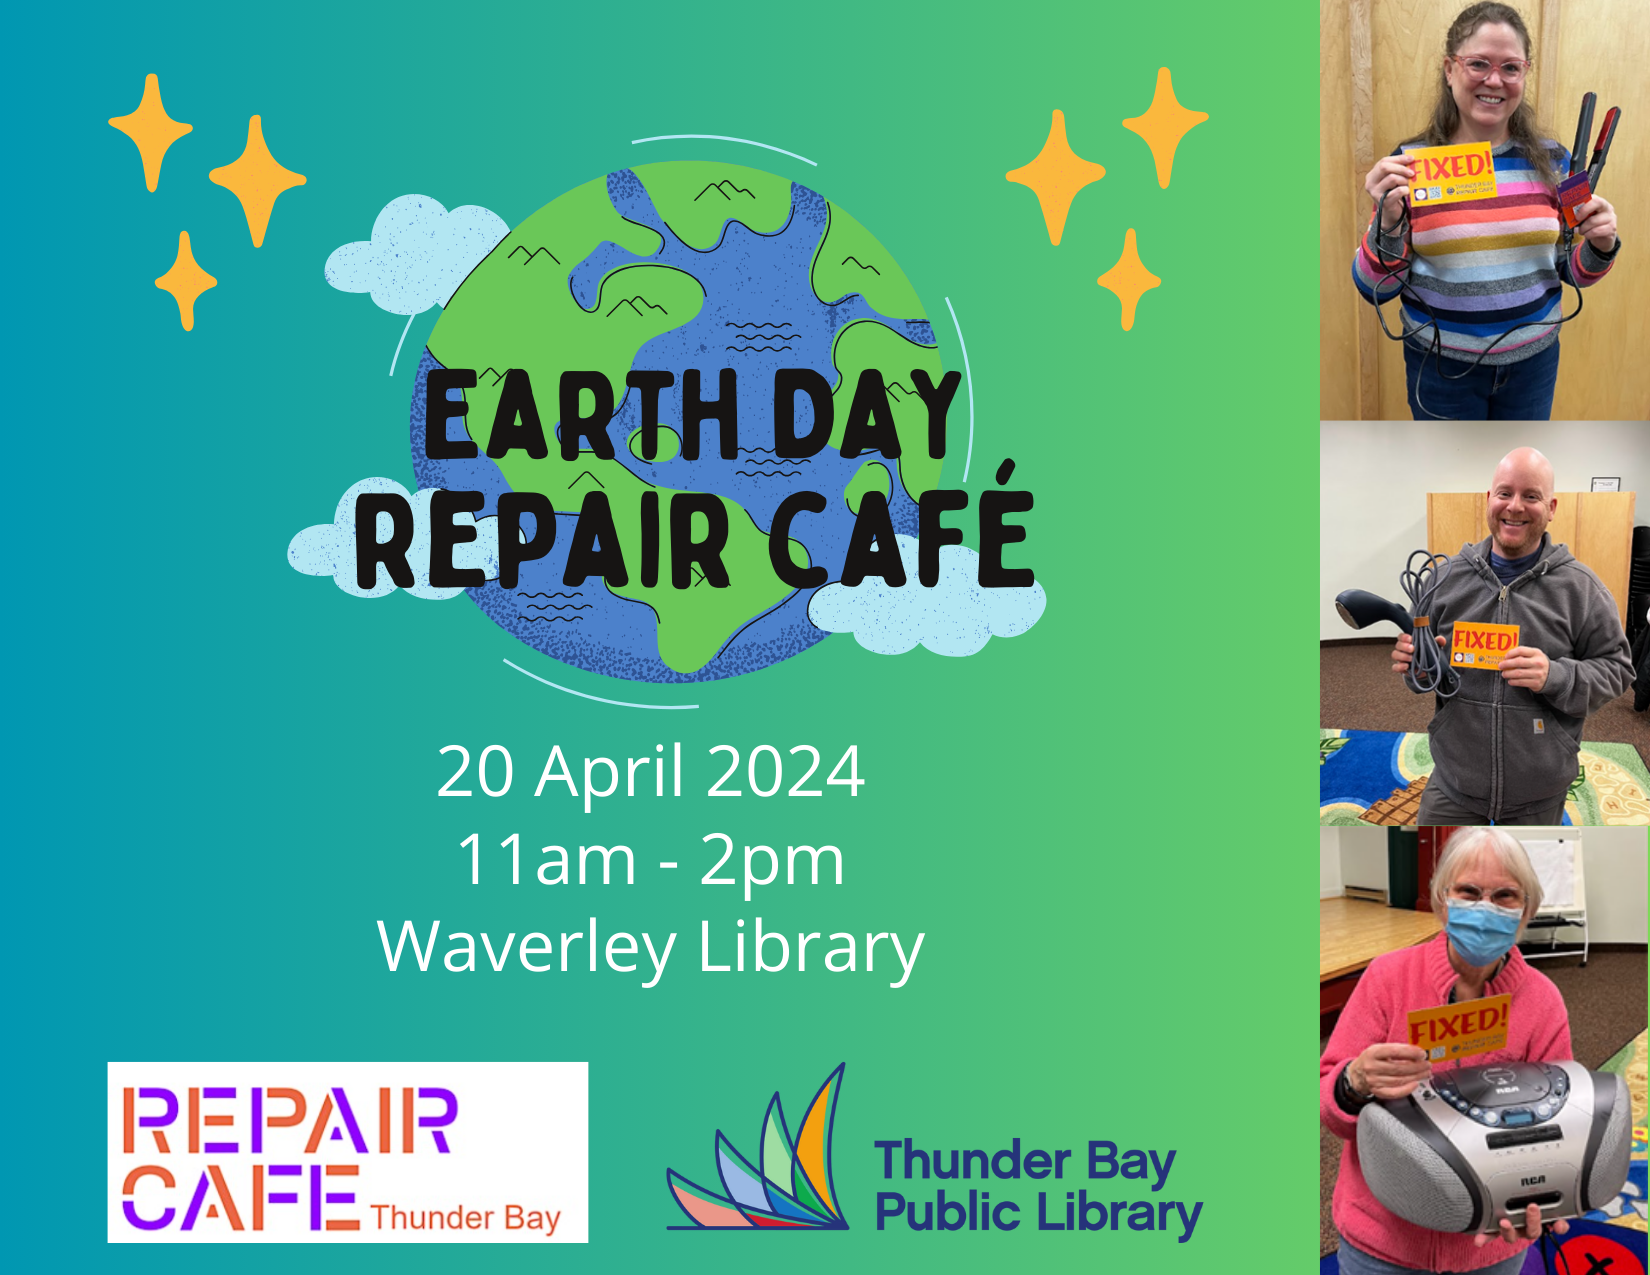 Thunder Bay Repair Café Earth Day Event